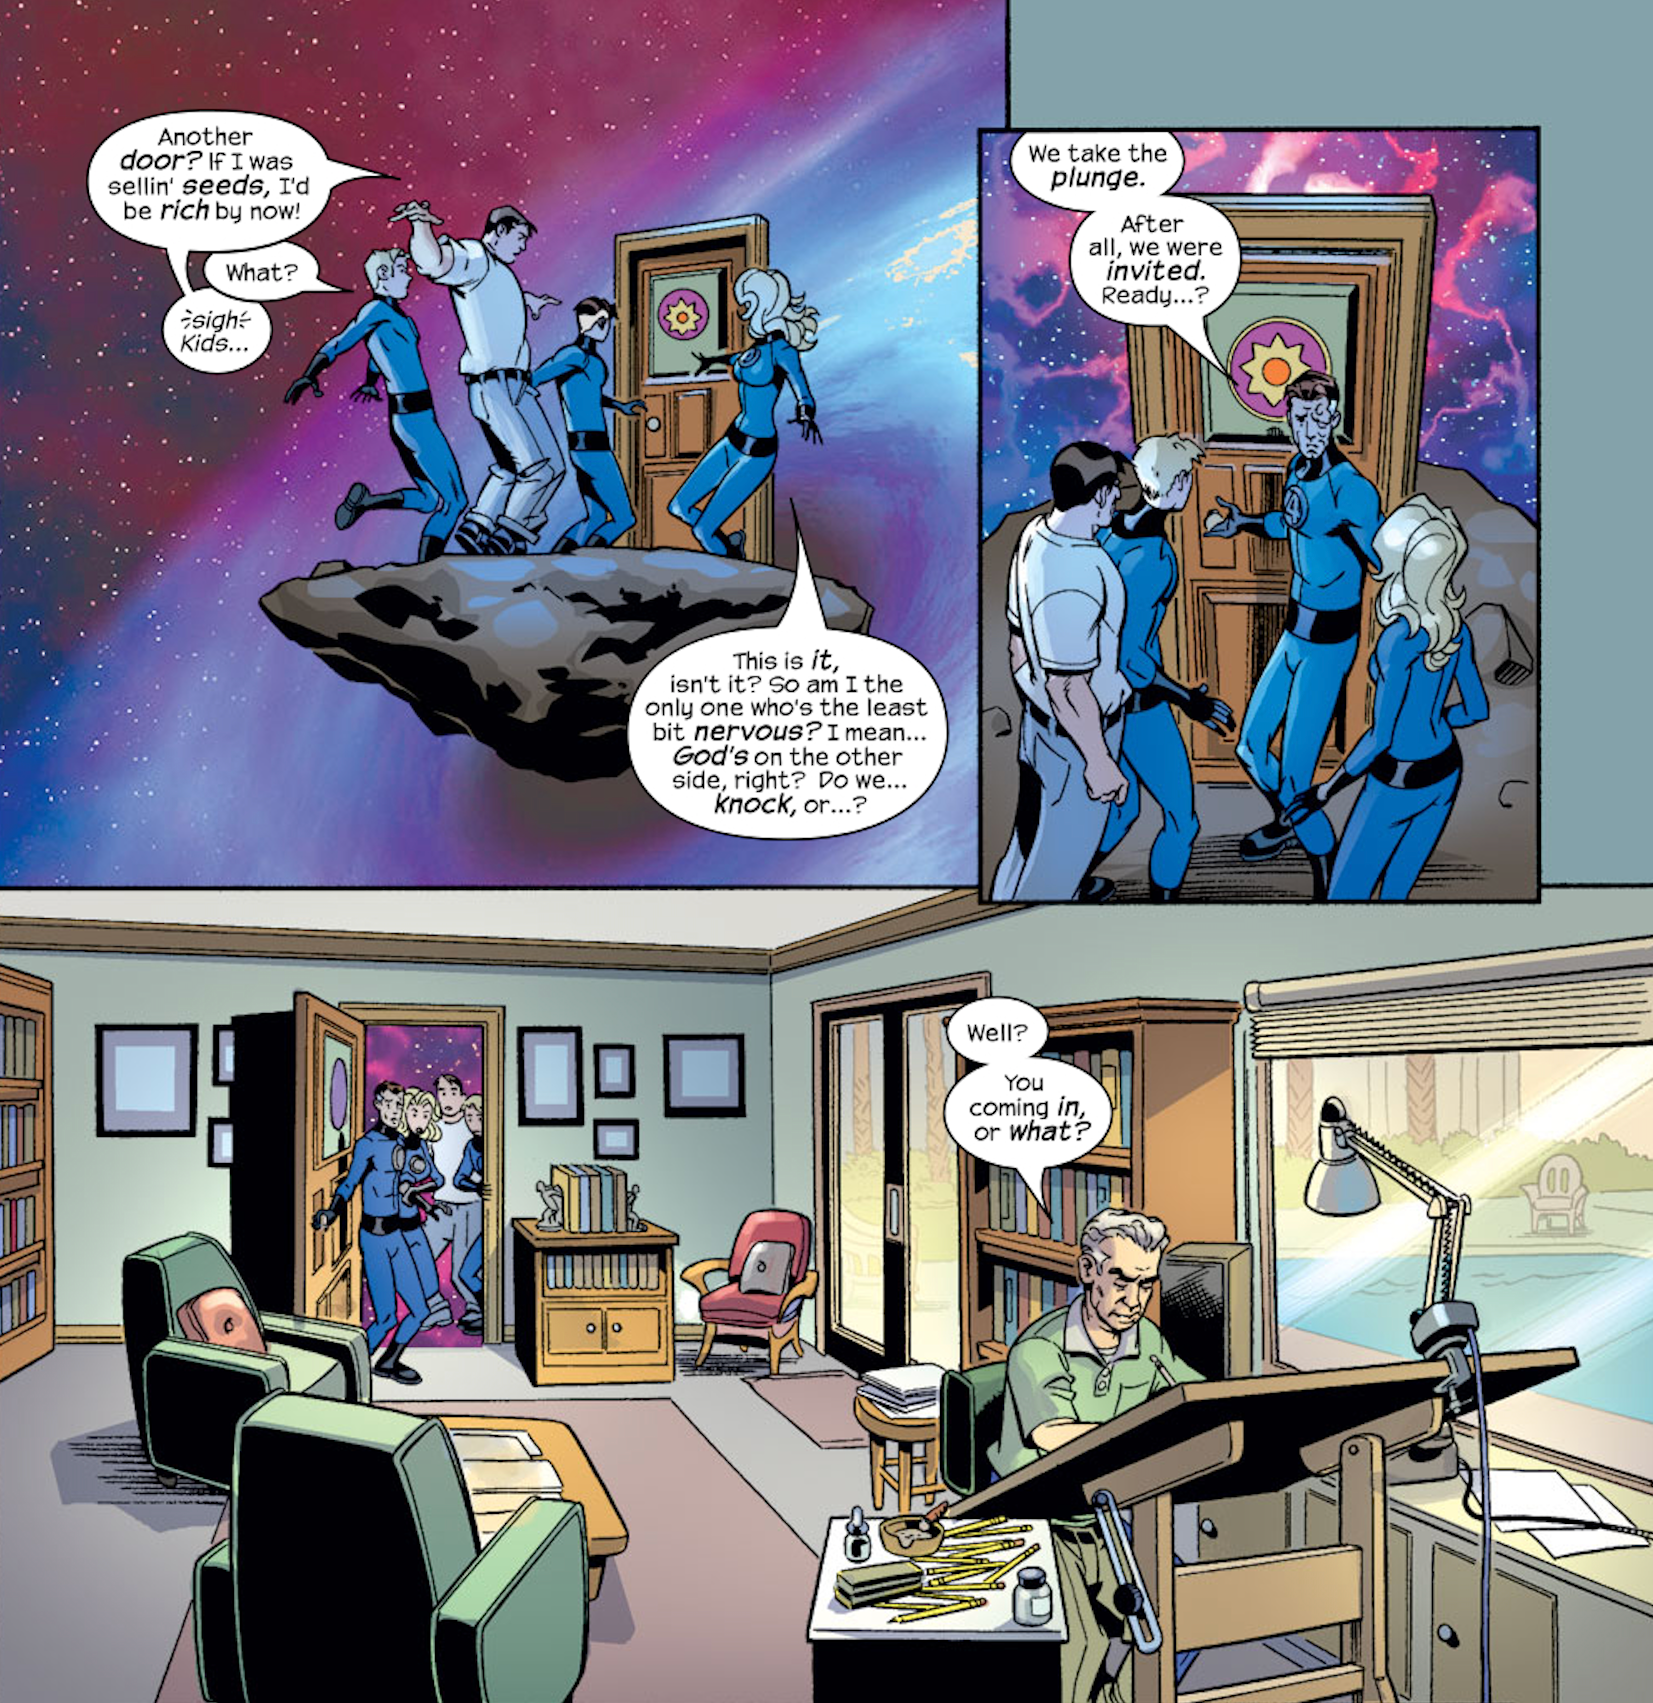 The Fantastic Four meet Jack Kirby